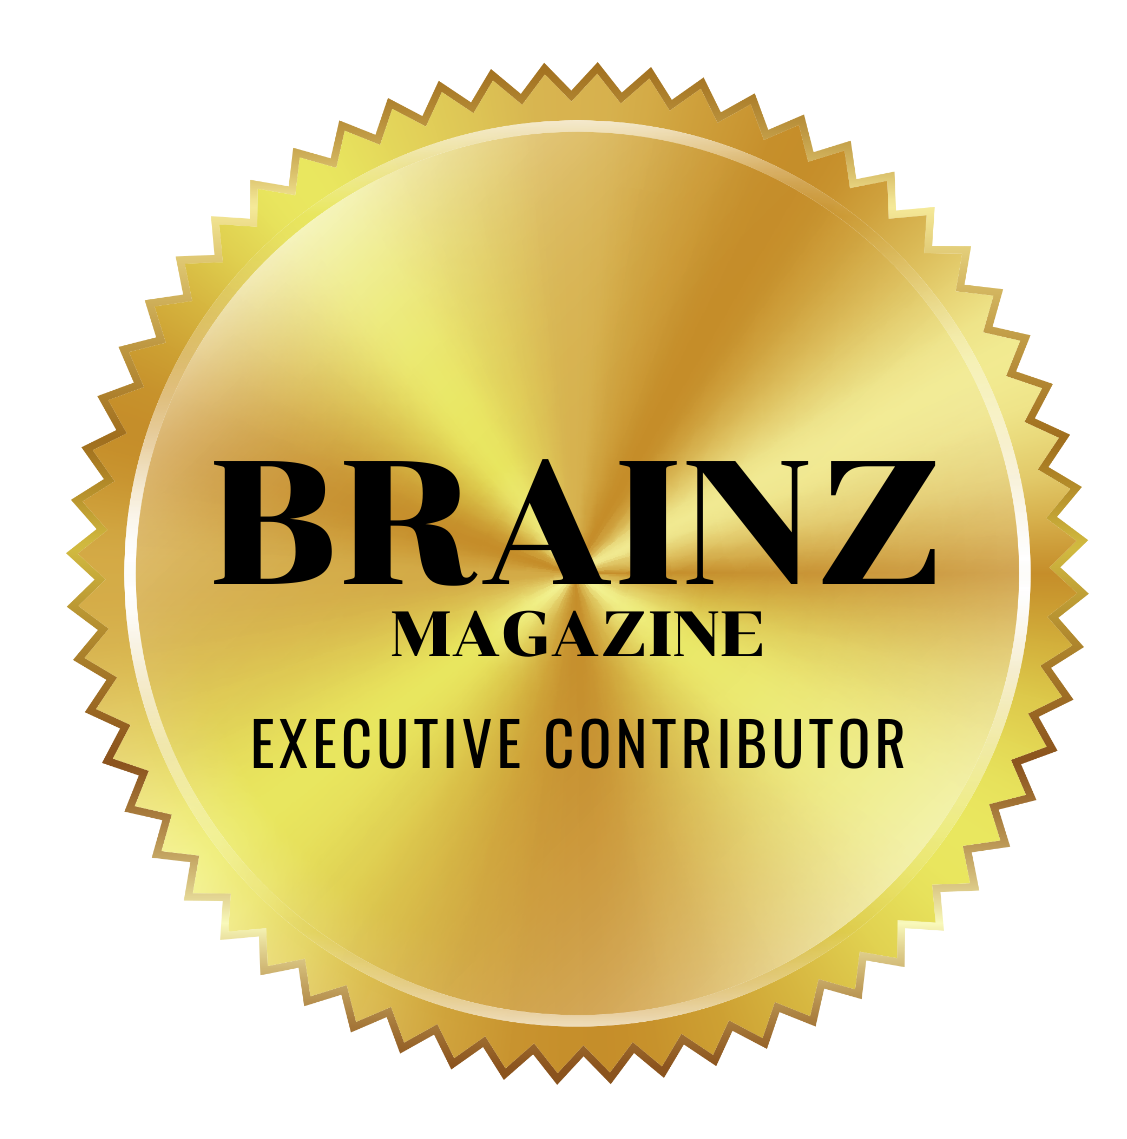 BRAIANZ Magazine Executive Contributor